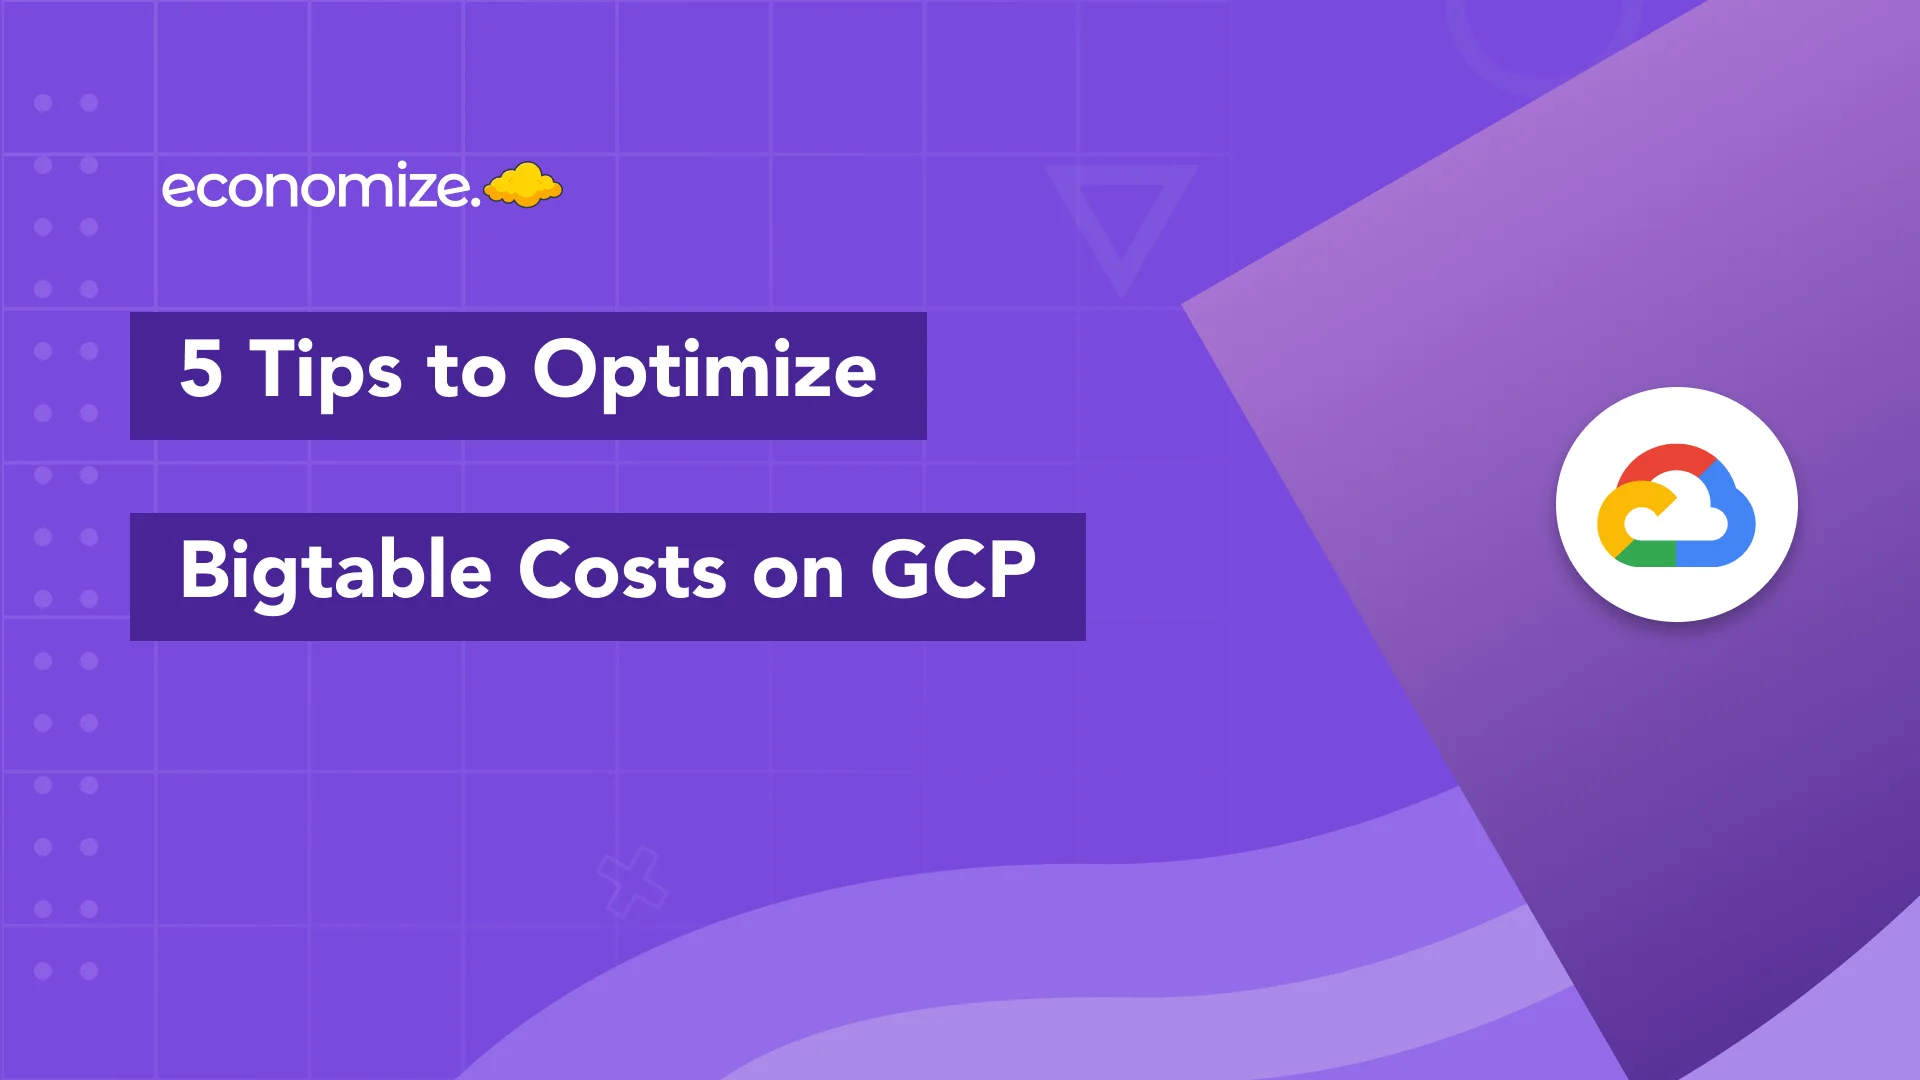 GCP Bigtable, Cost Optimization, Billing Console, Data, Storage, Analytics